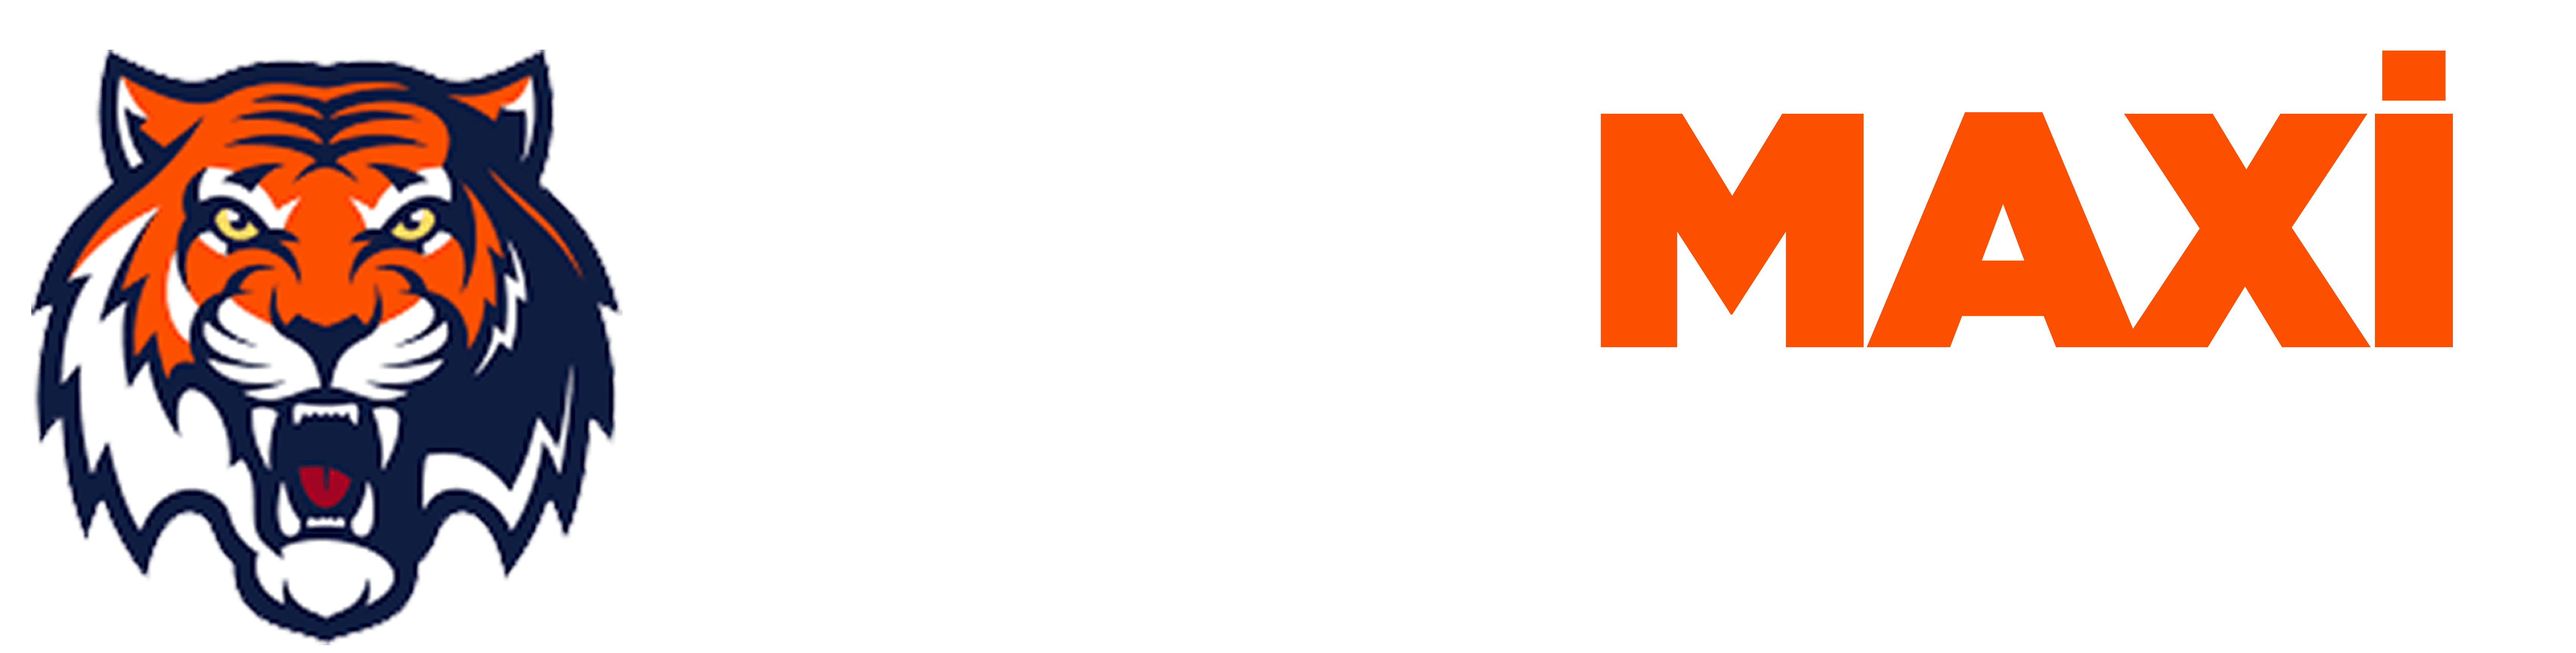 Turkmaxi.org Webmaster Forumu ve Webmaster Sitesi